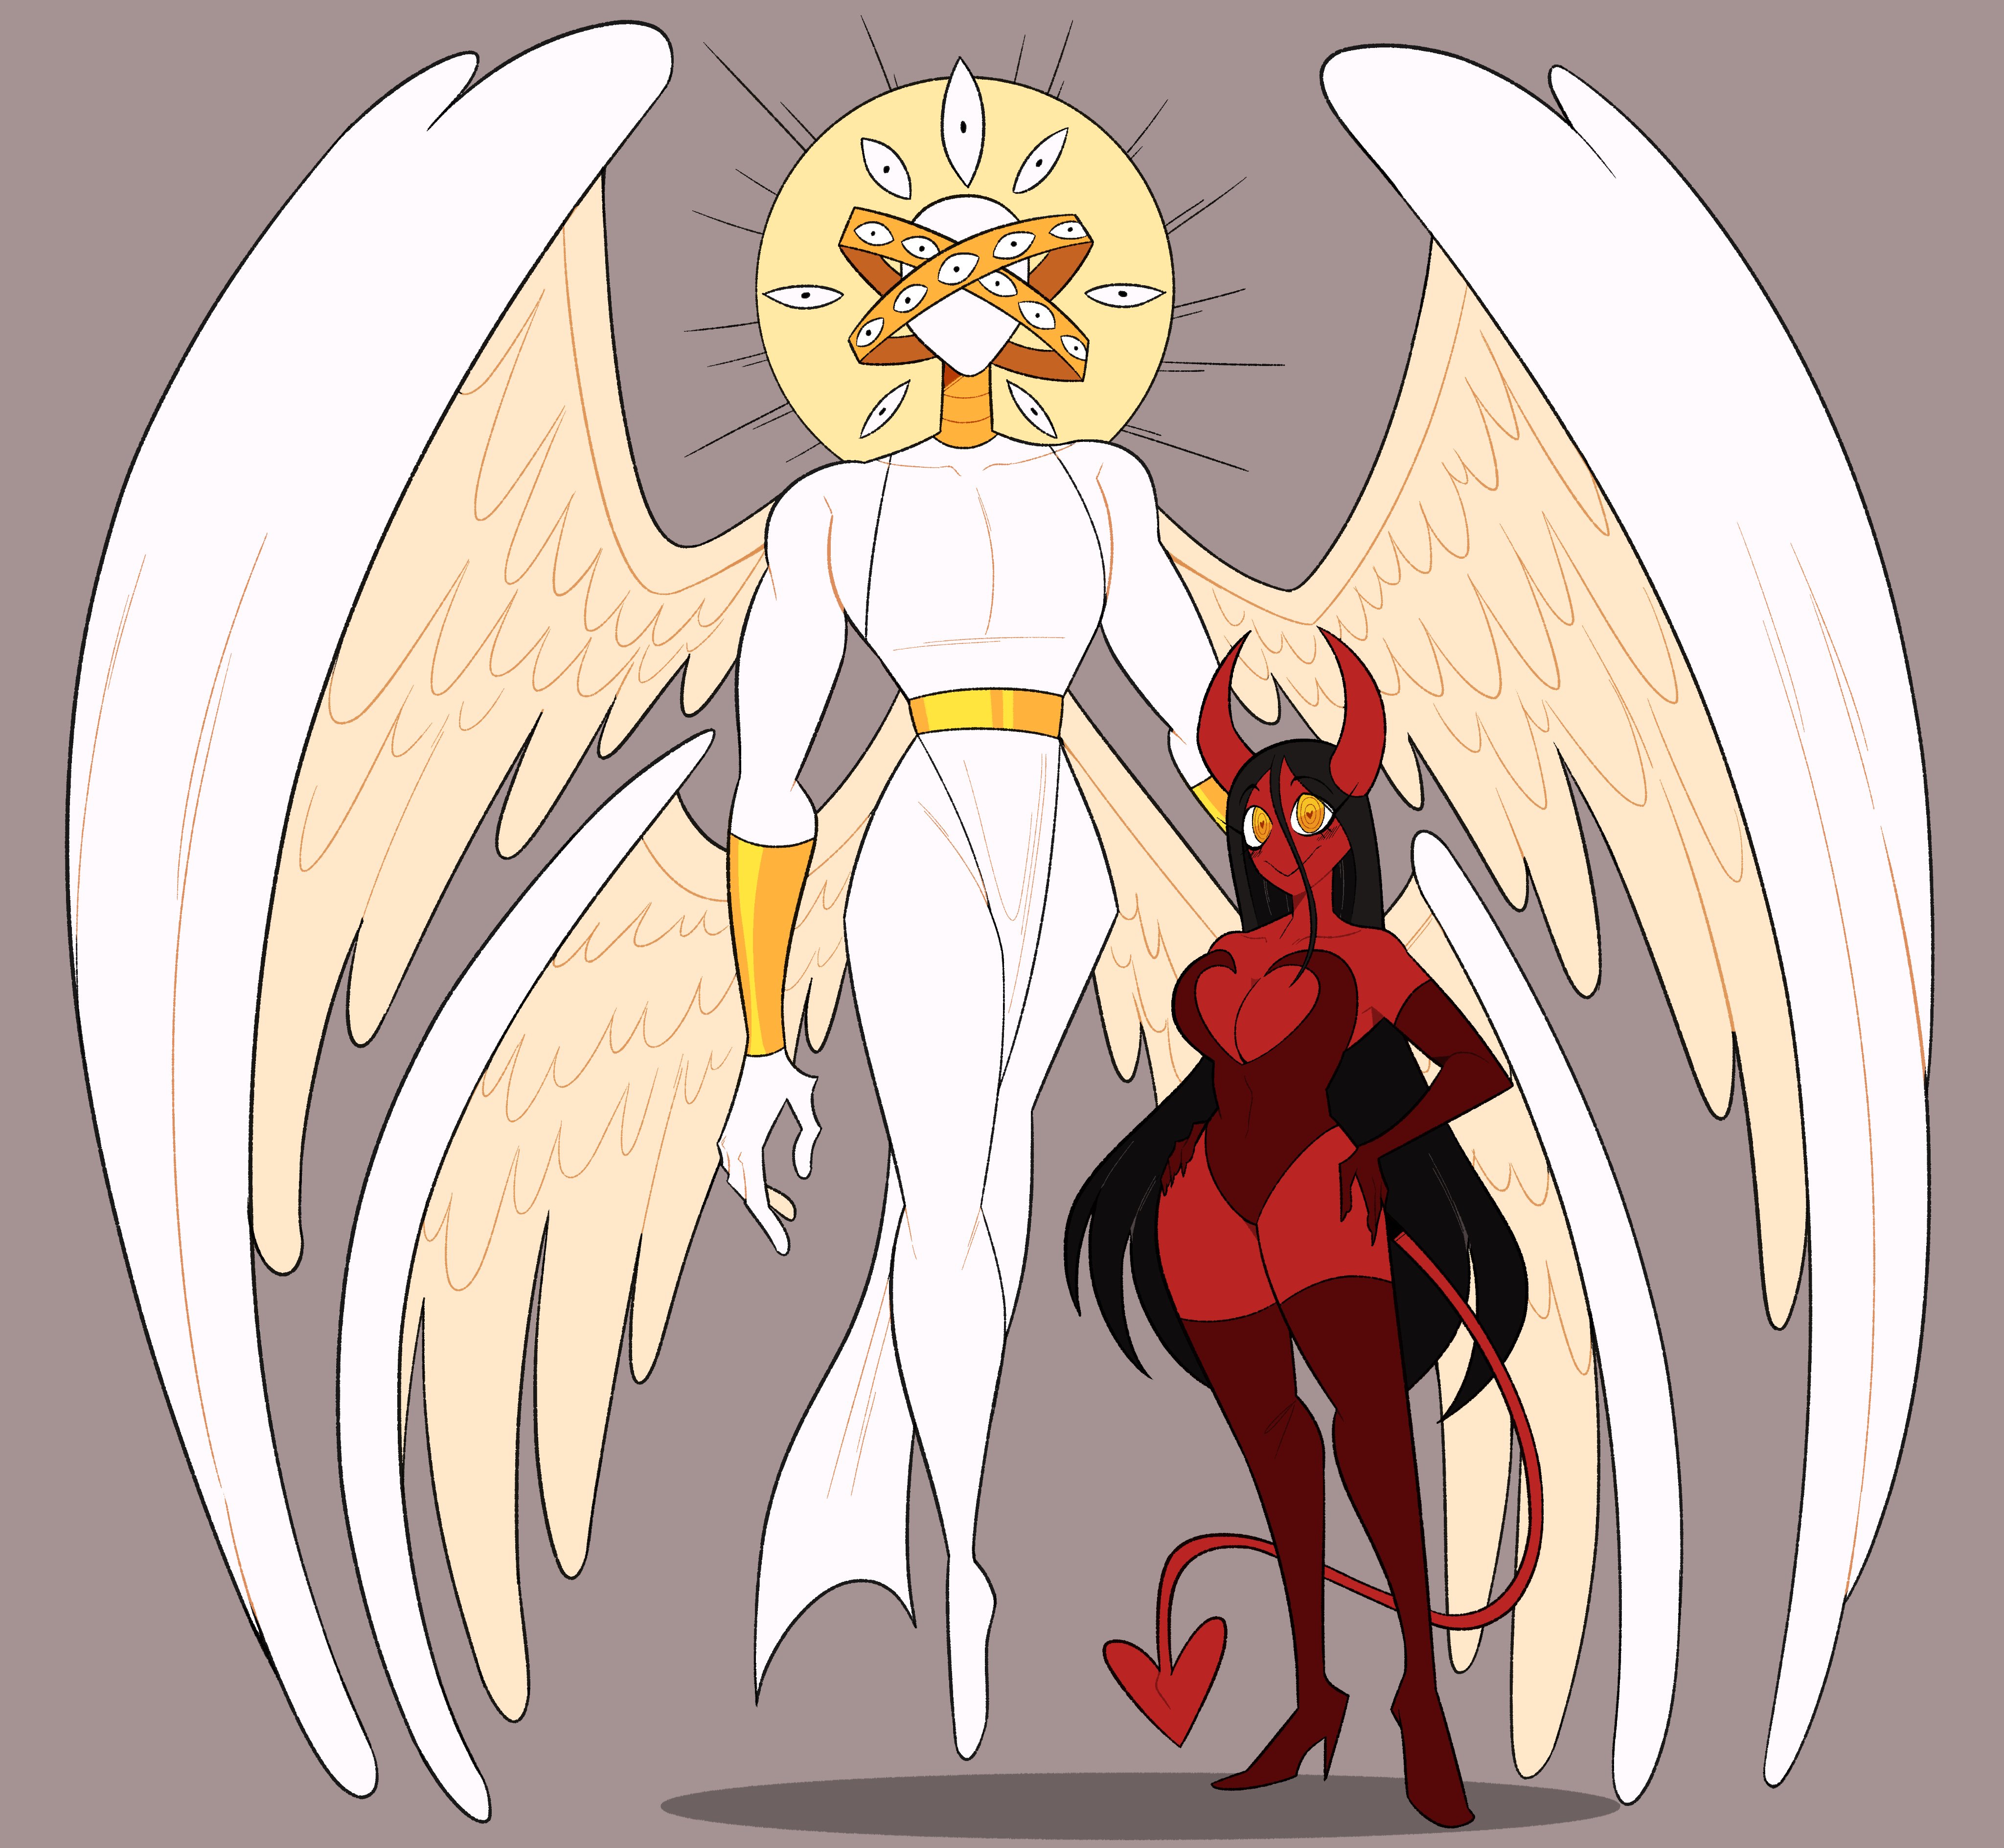 Angel and demon girls